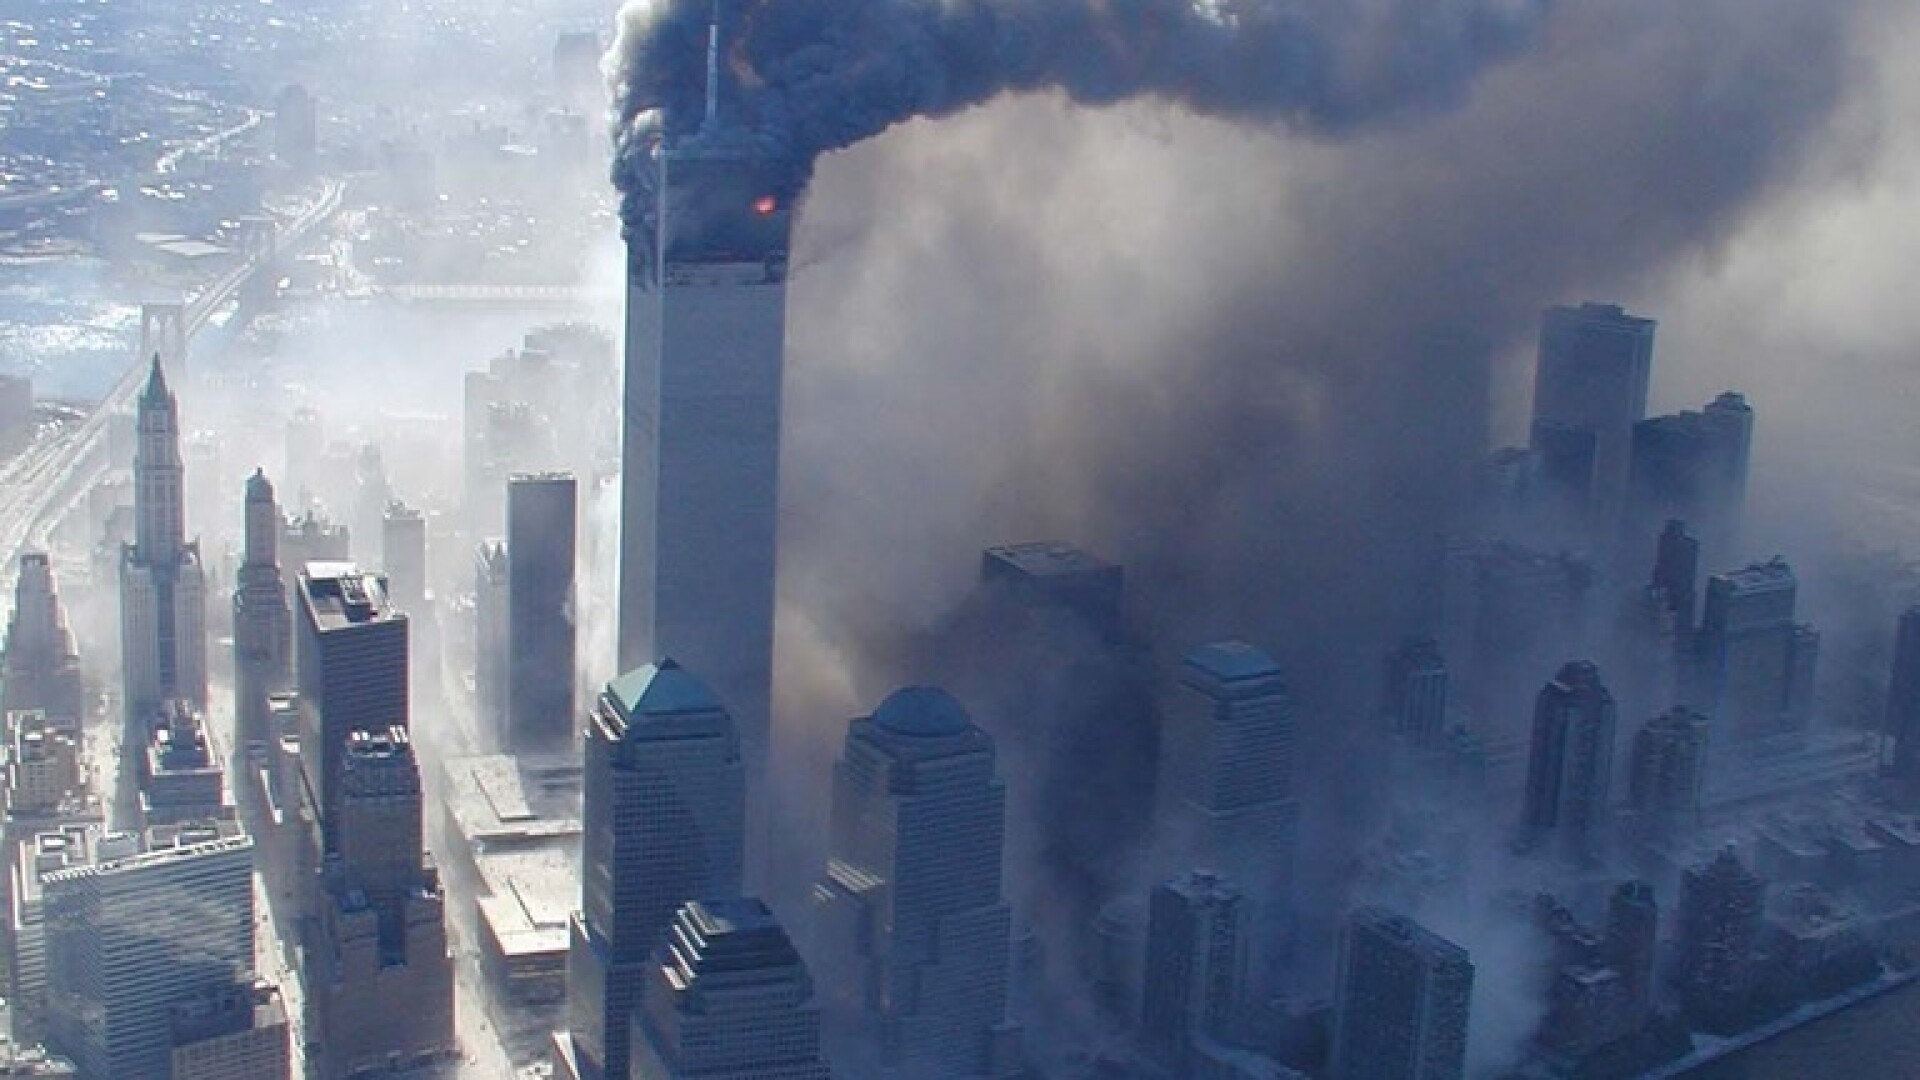 Lumea dupa 11 septembrie: Atacuri Al-Qaeda care au schimbat istoria